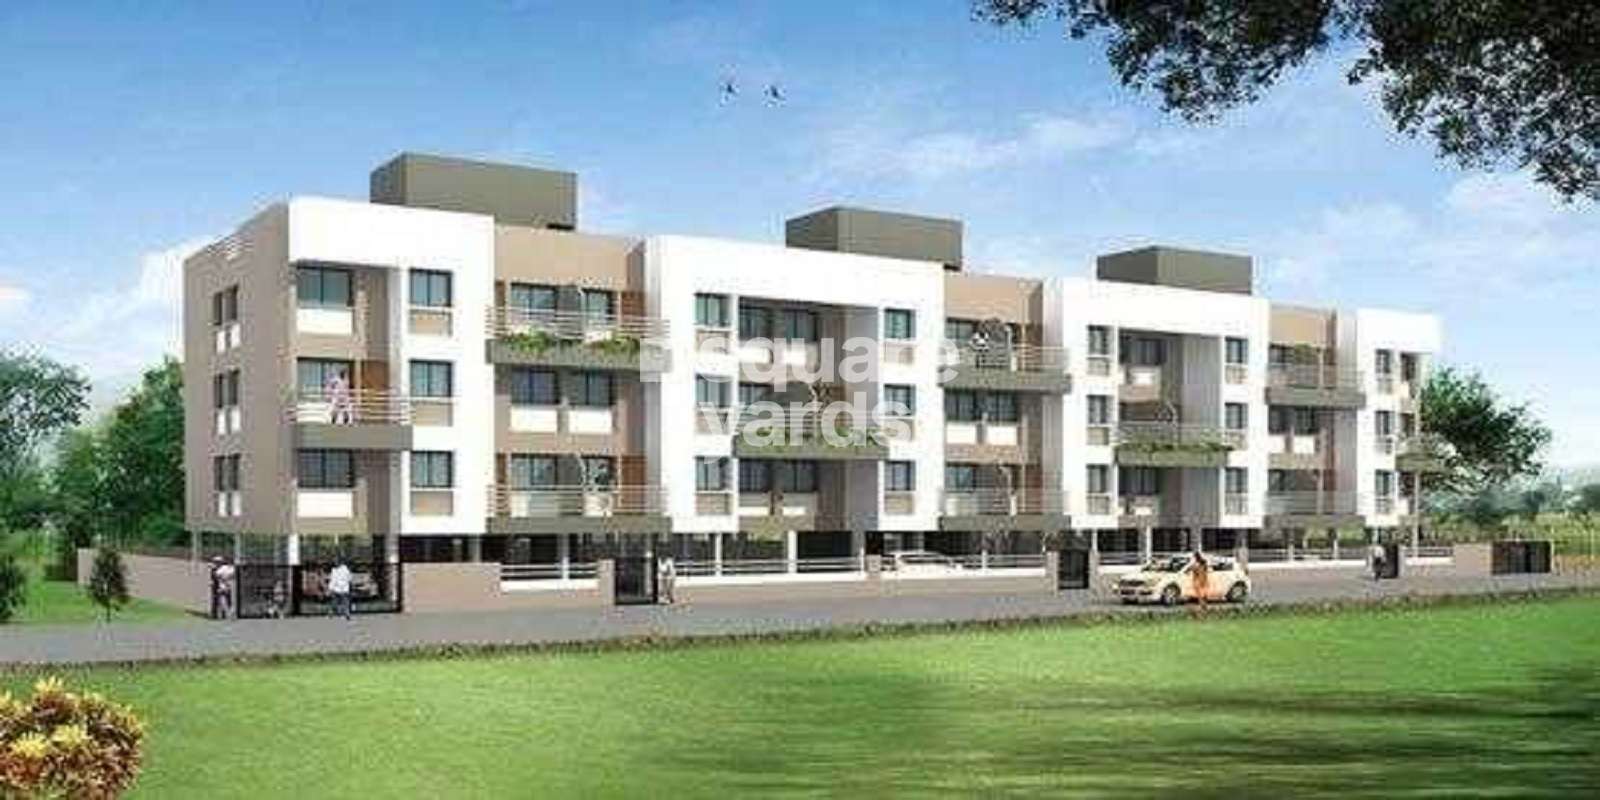 Khedkar Tribhuvan Apartments Cover Image